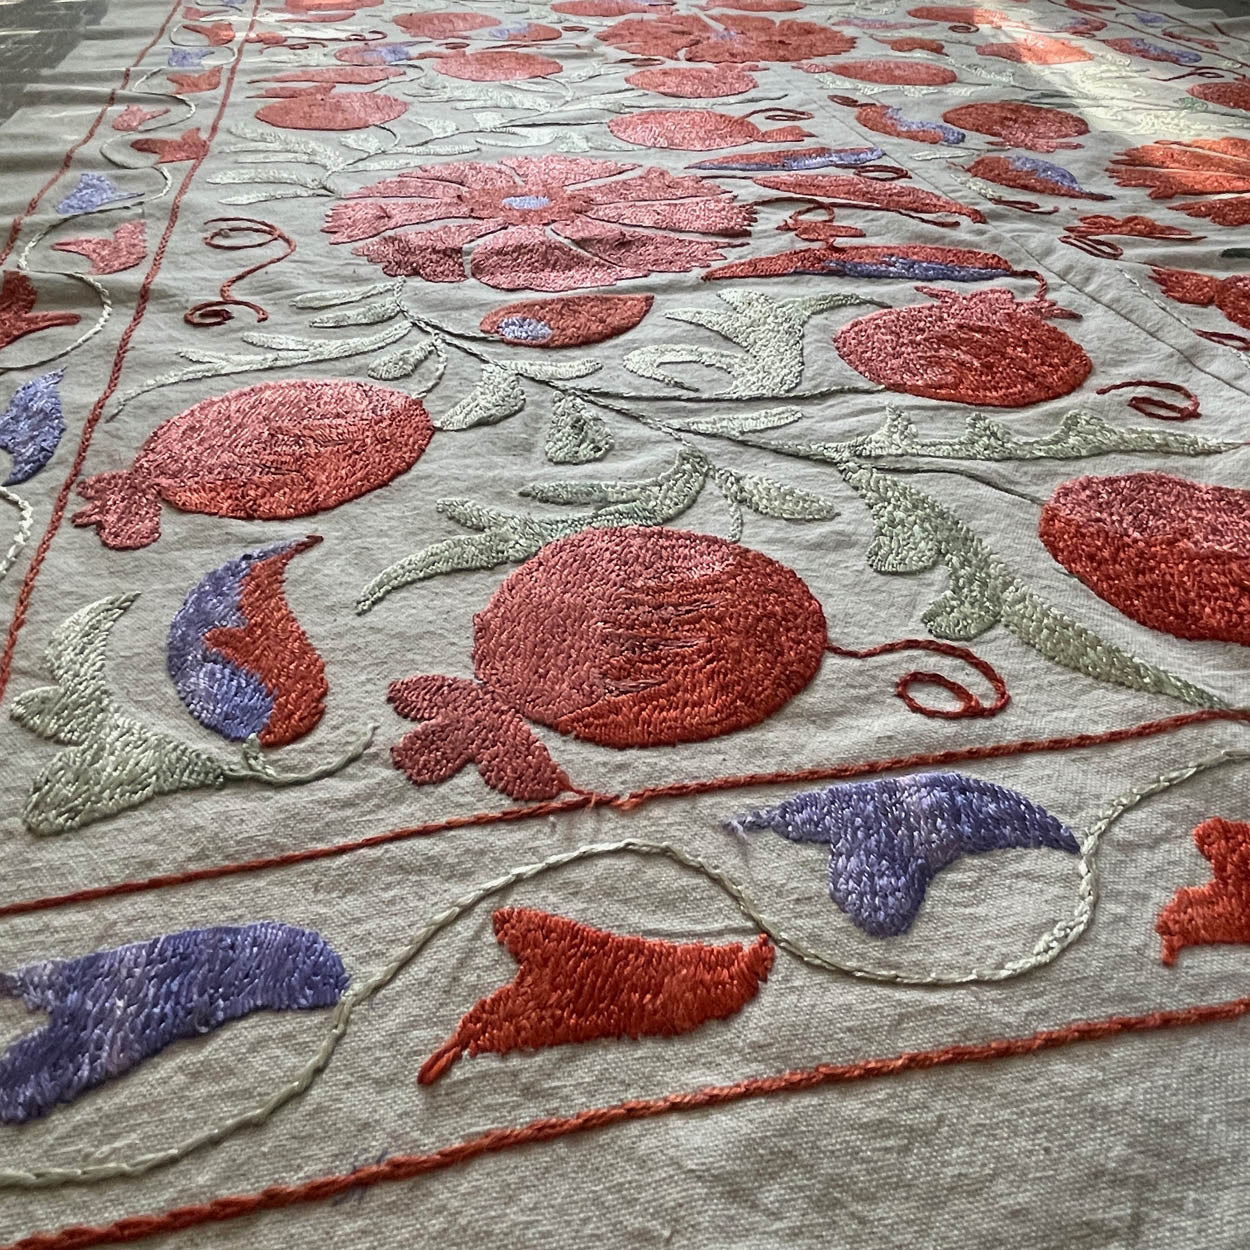 Uzbeki Suzani Hand Embroidered Textile Wall Hanging | Home Décor | Throw | 100cm x 150cm SUZ220518019 - Wildash London